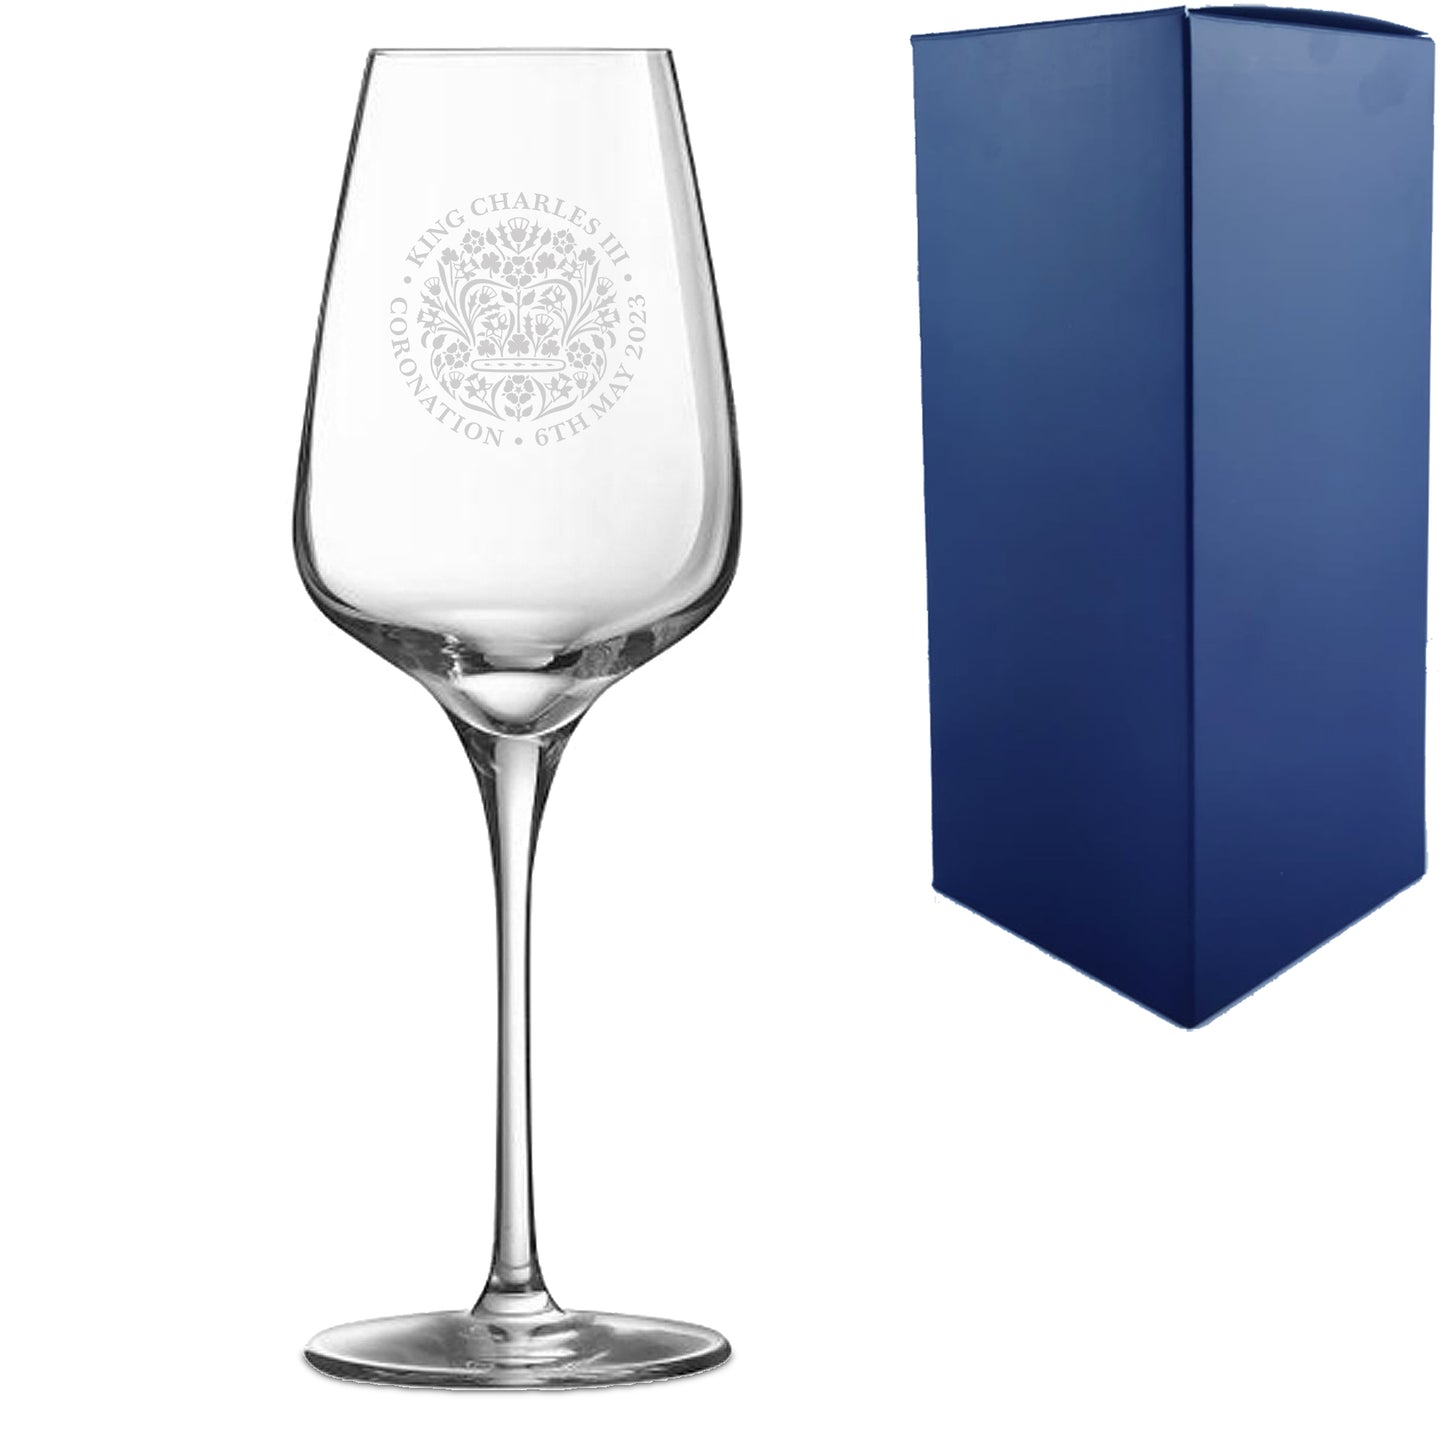 Engraved Sublym Wine Glass 450ml - King's Coronation Emblem - Lynendo Trade Store